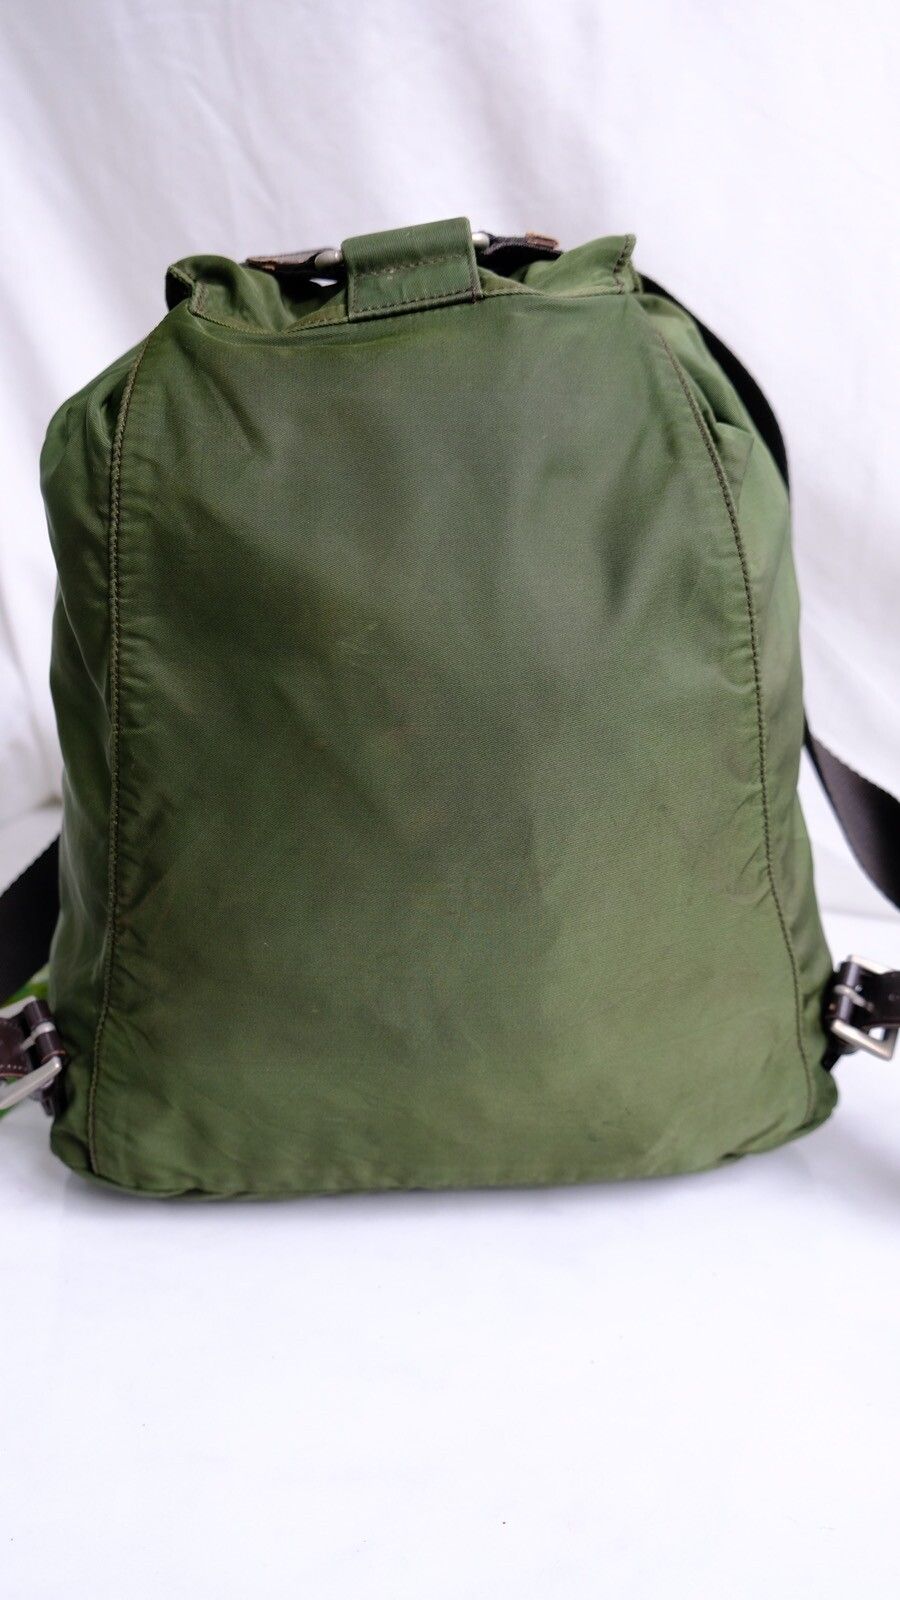 Authentic vintage Prada green army nylon backpack - 4